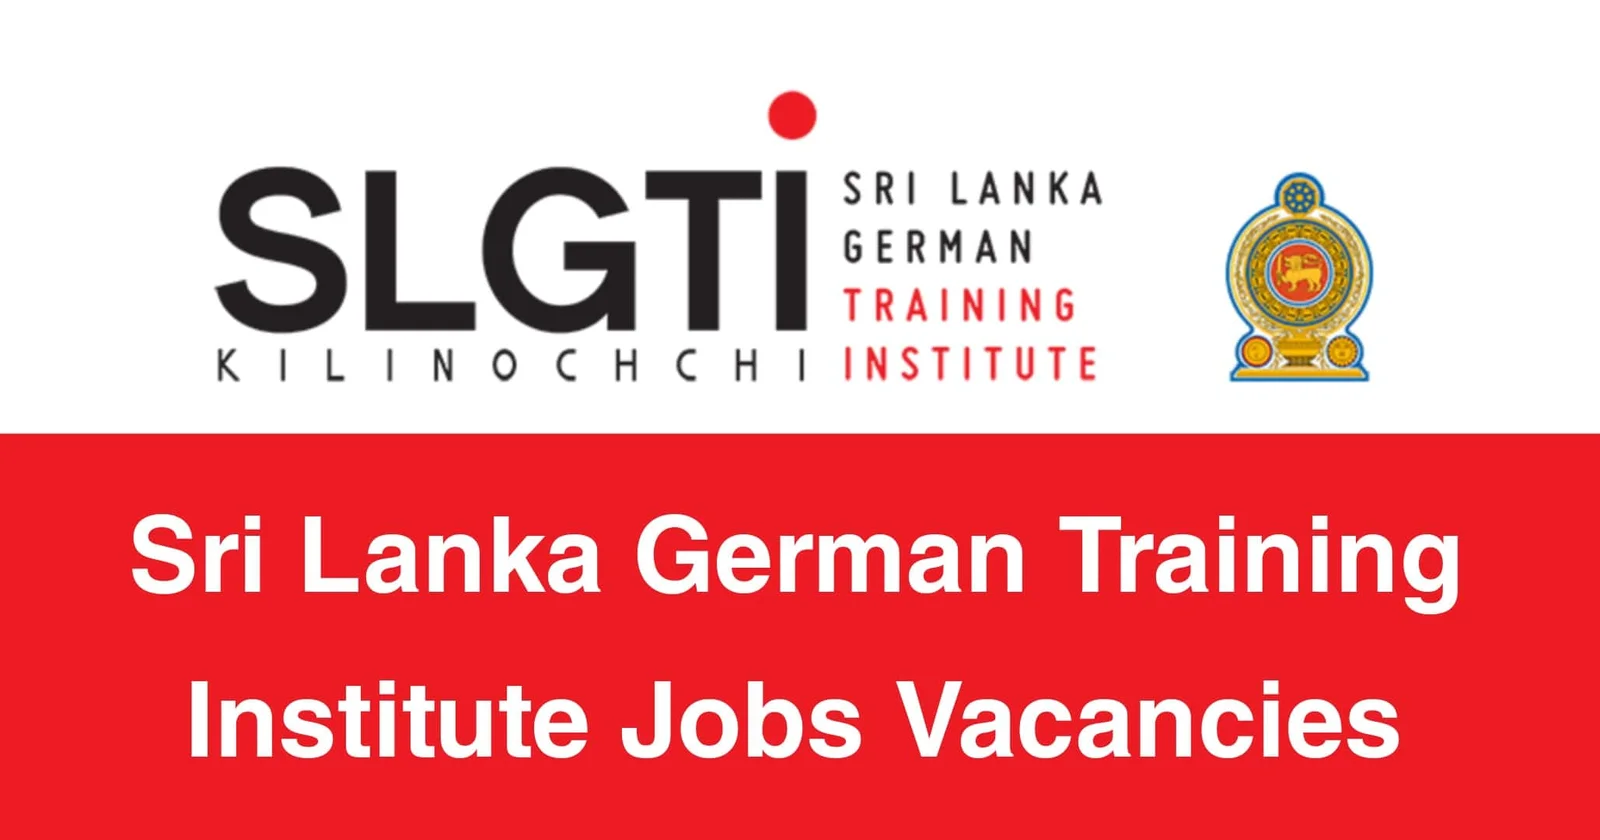 Sri Lanka German Training Institute